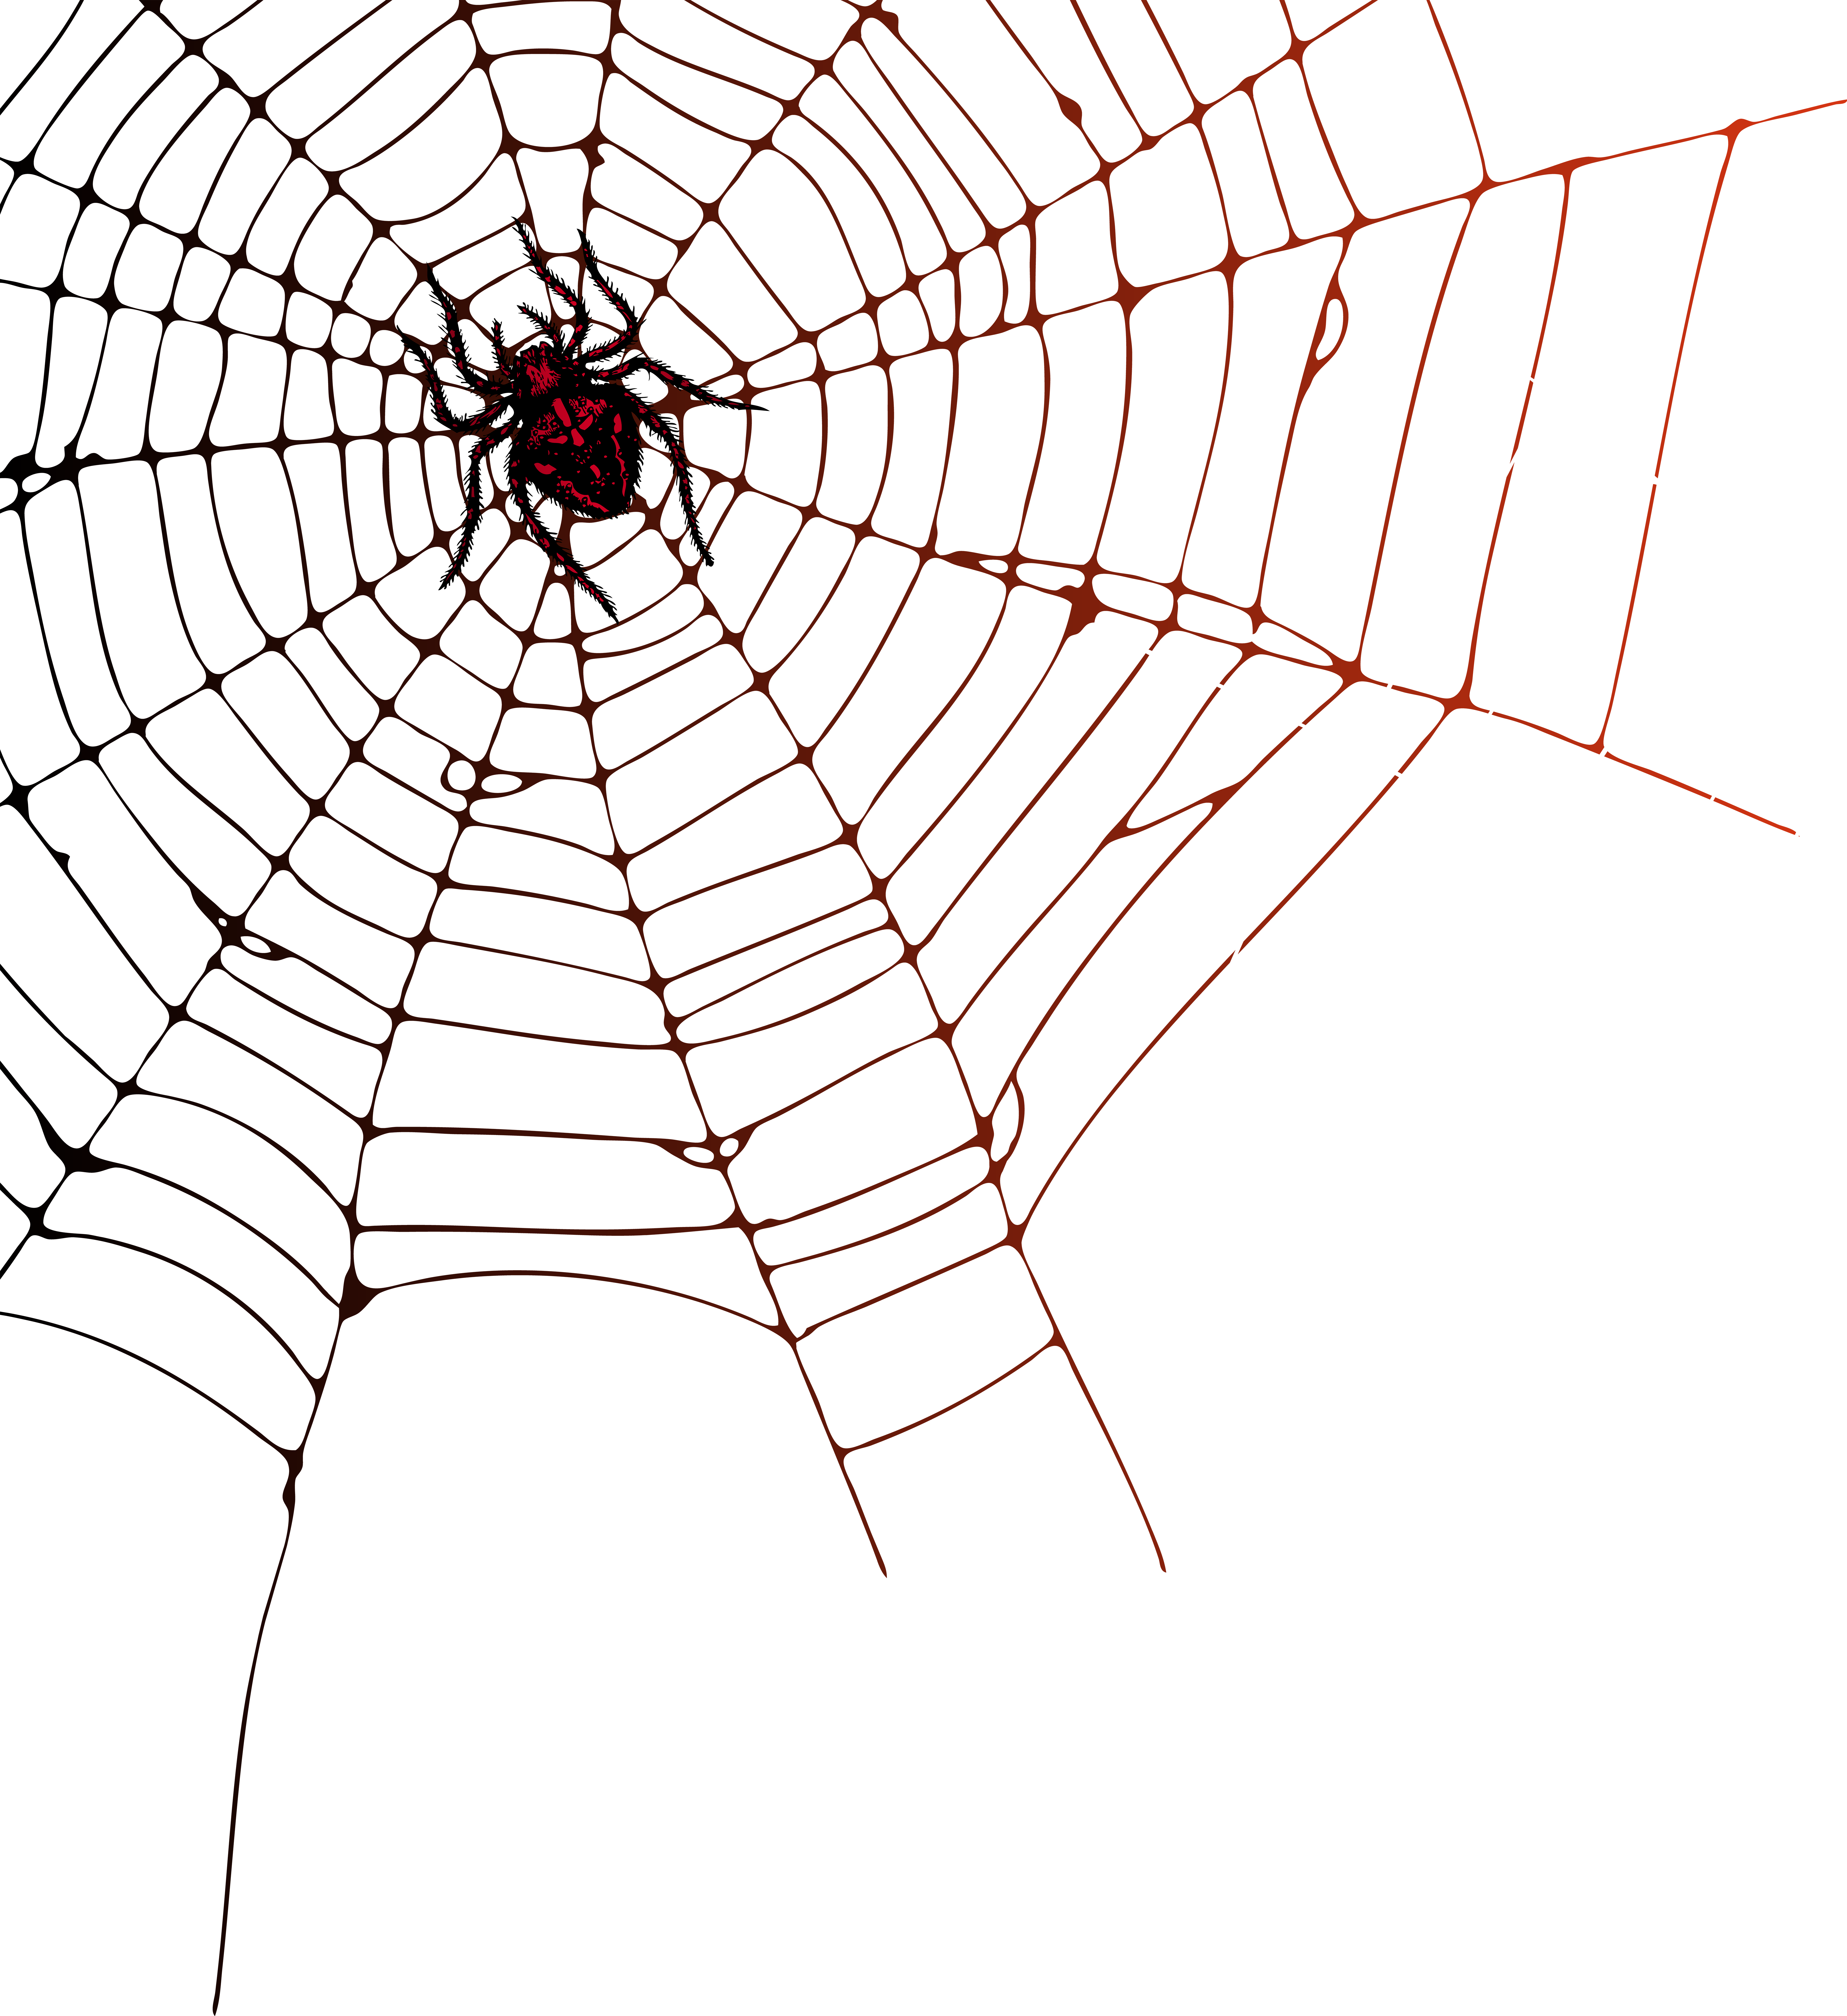 Spider Web PNG Clip Art Image 1962064617 ?m=1534548575